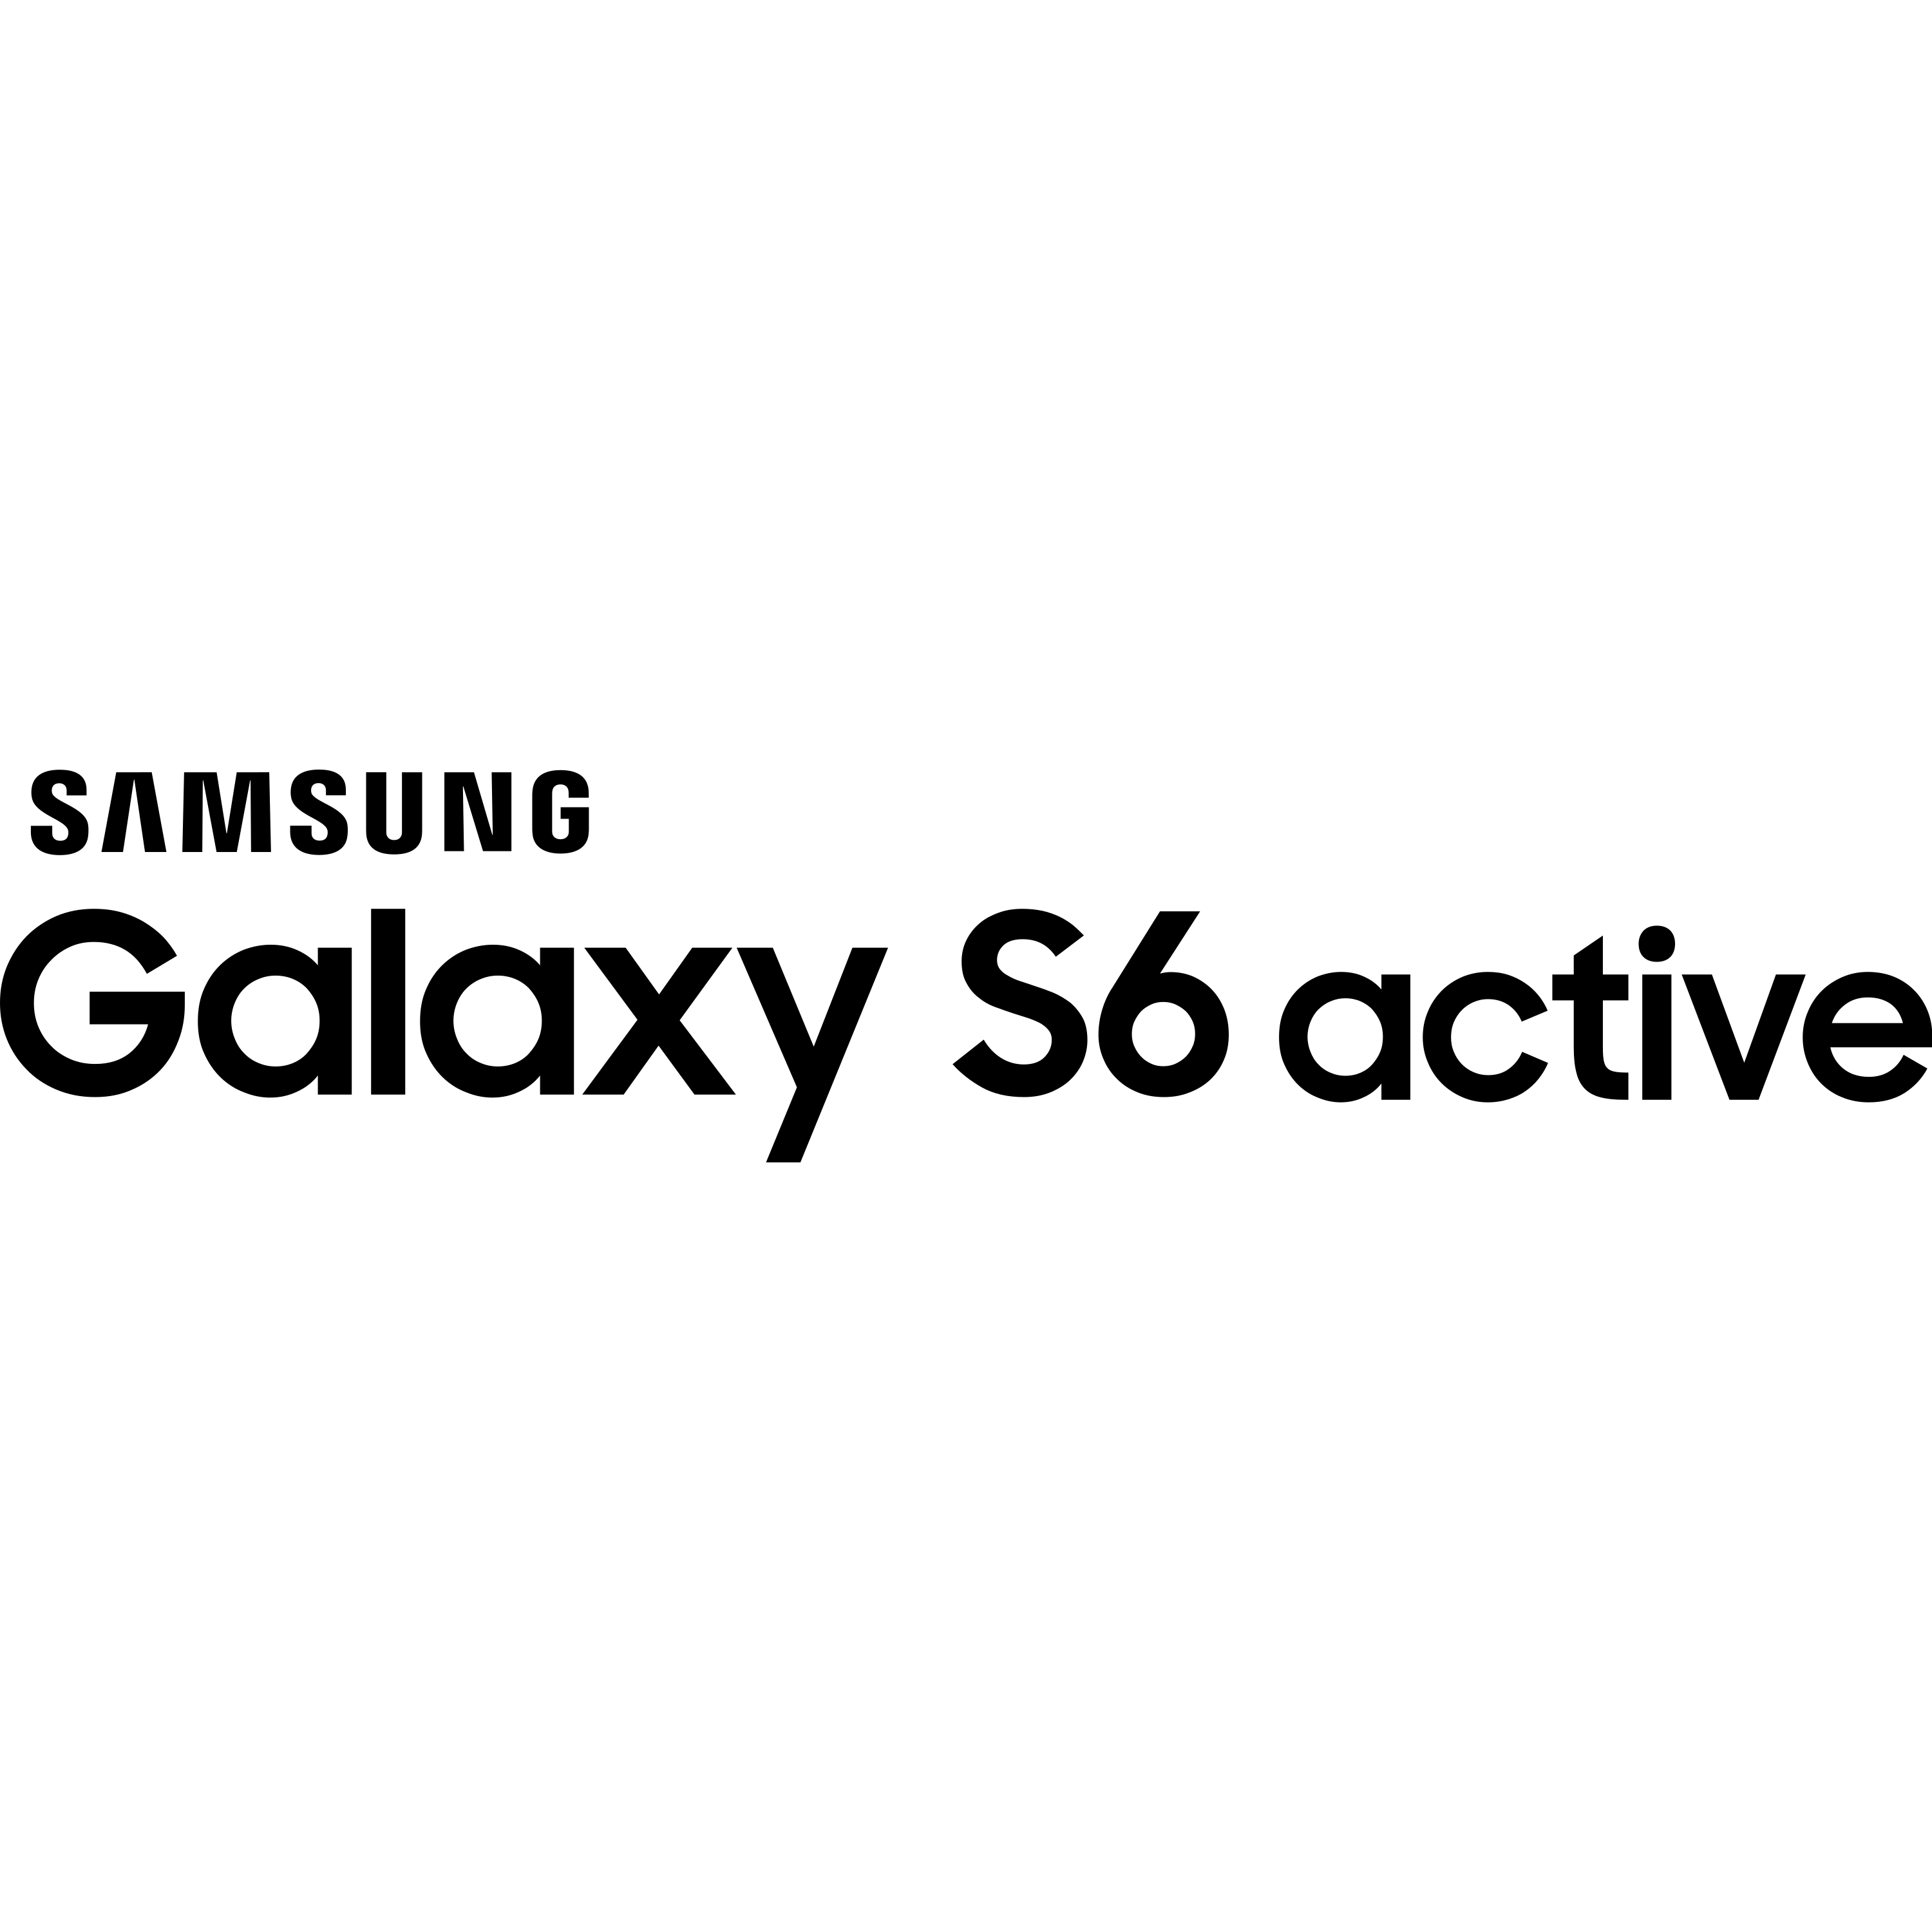 Samsung Galaxy S6 Active Logo Transparent Image